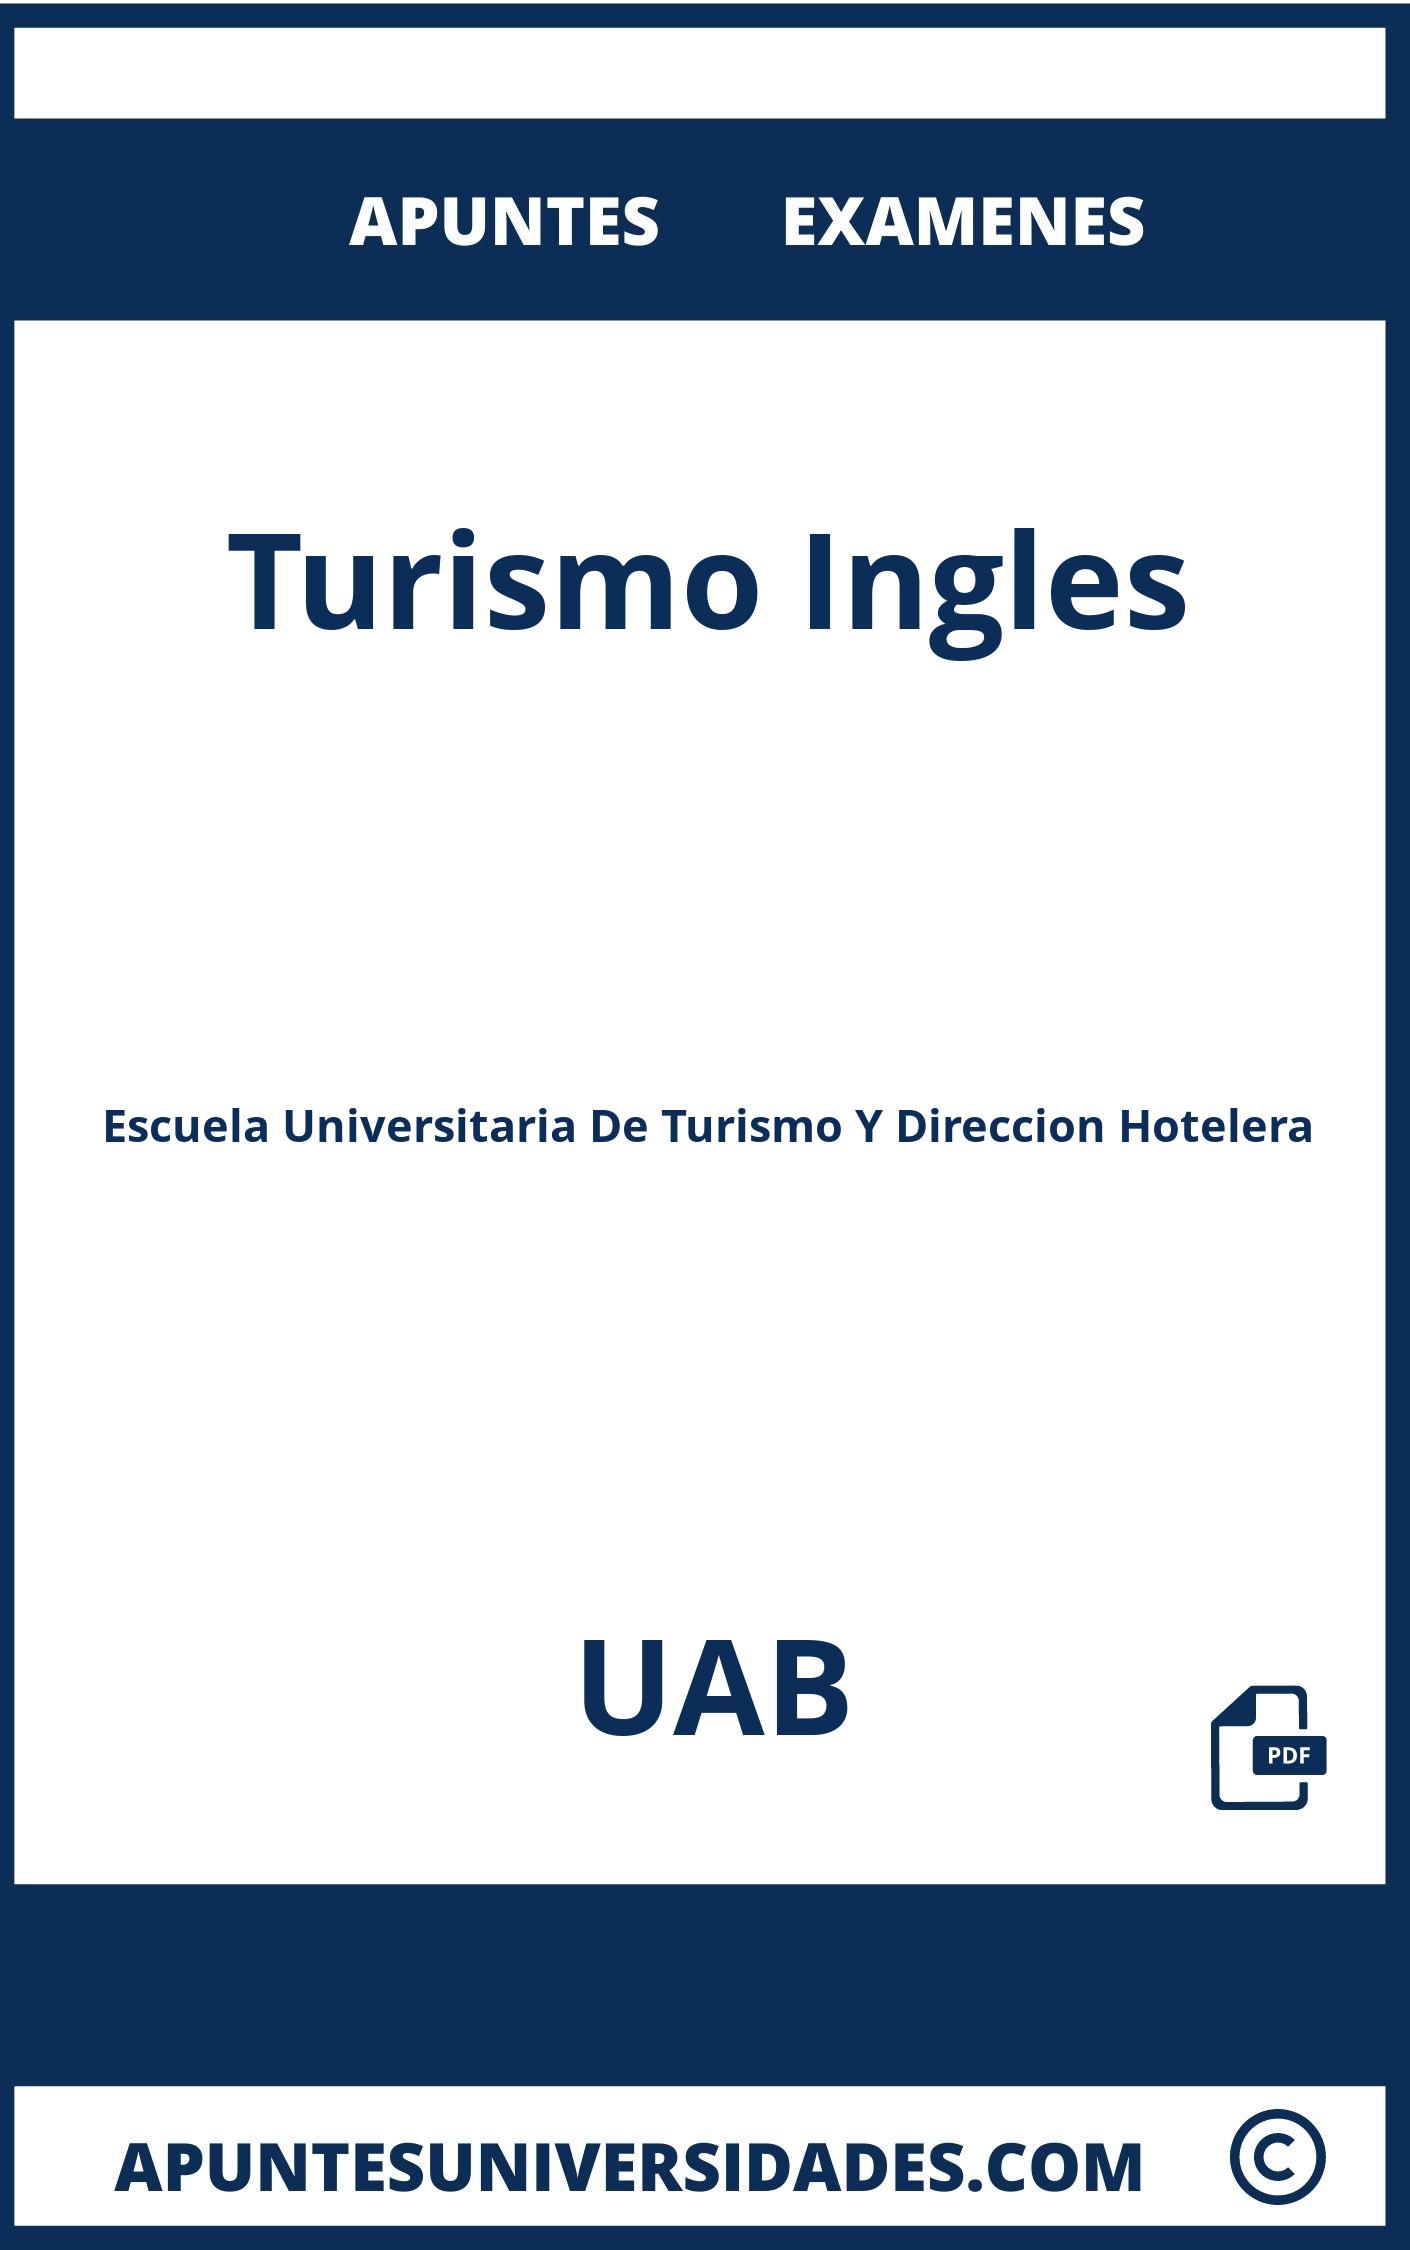 Apuntes Turismo Ingles UAB y Examenes